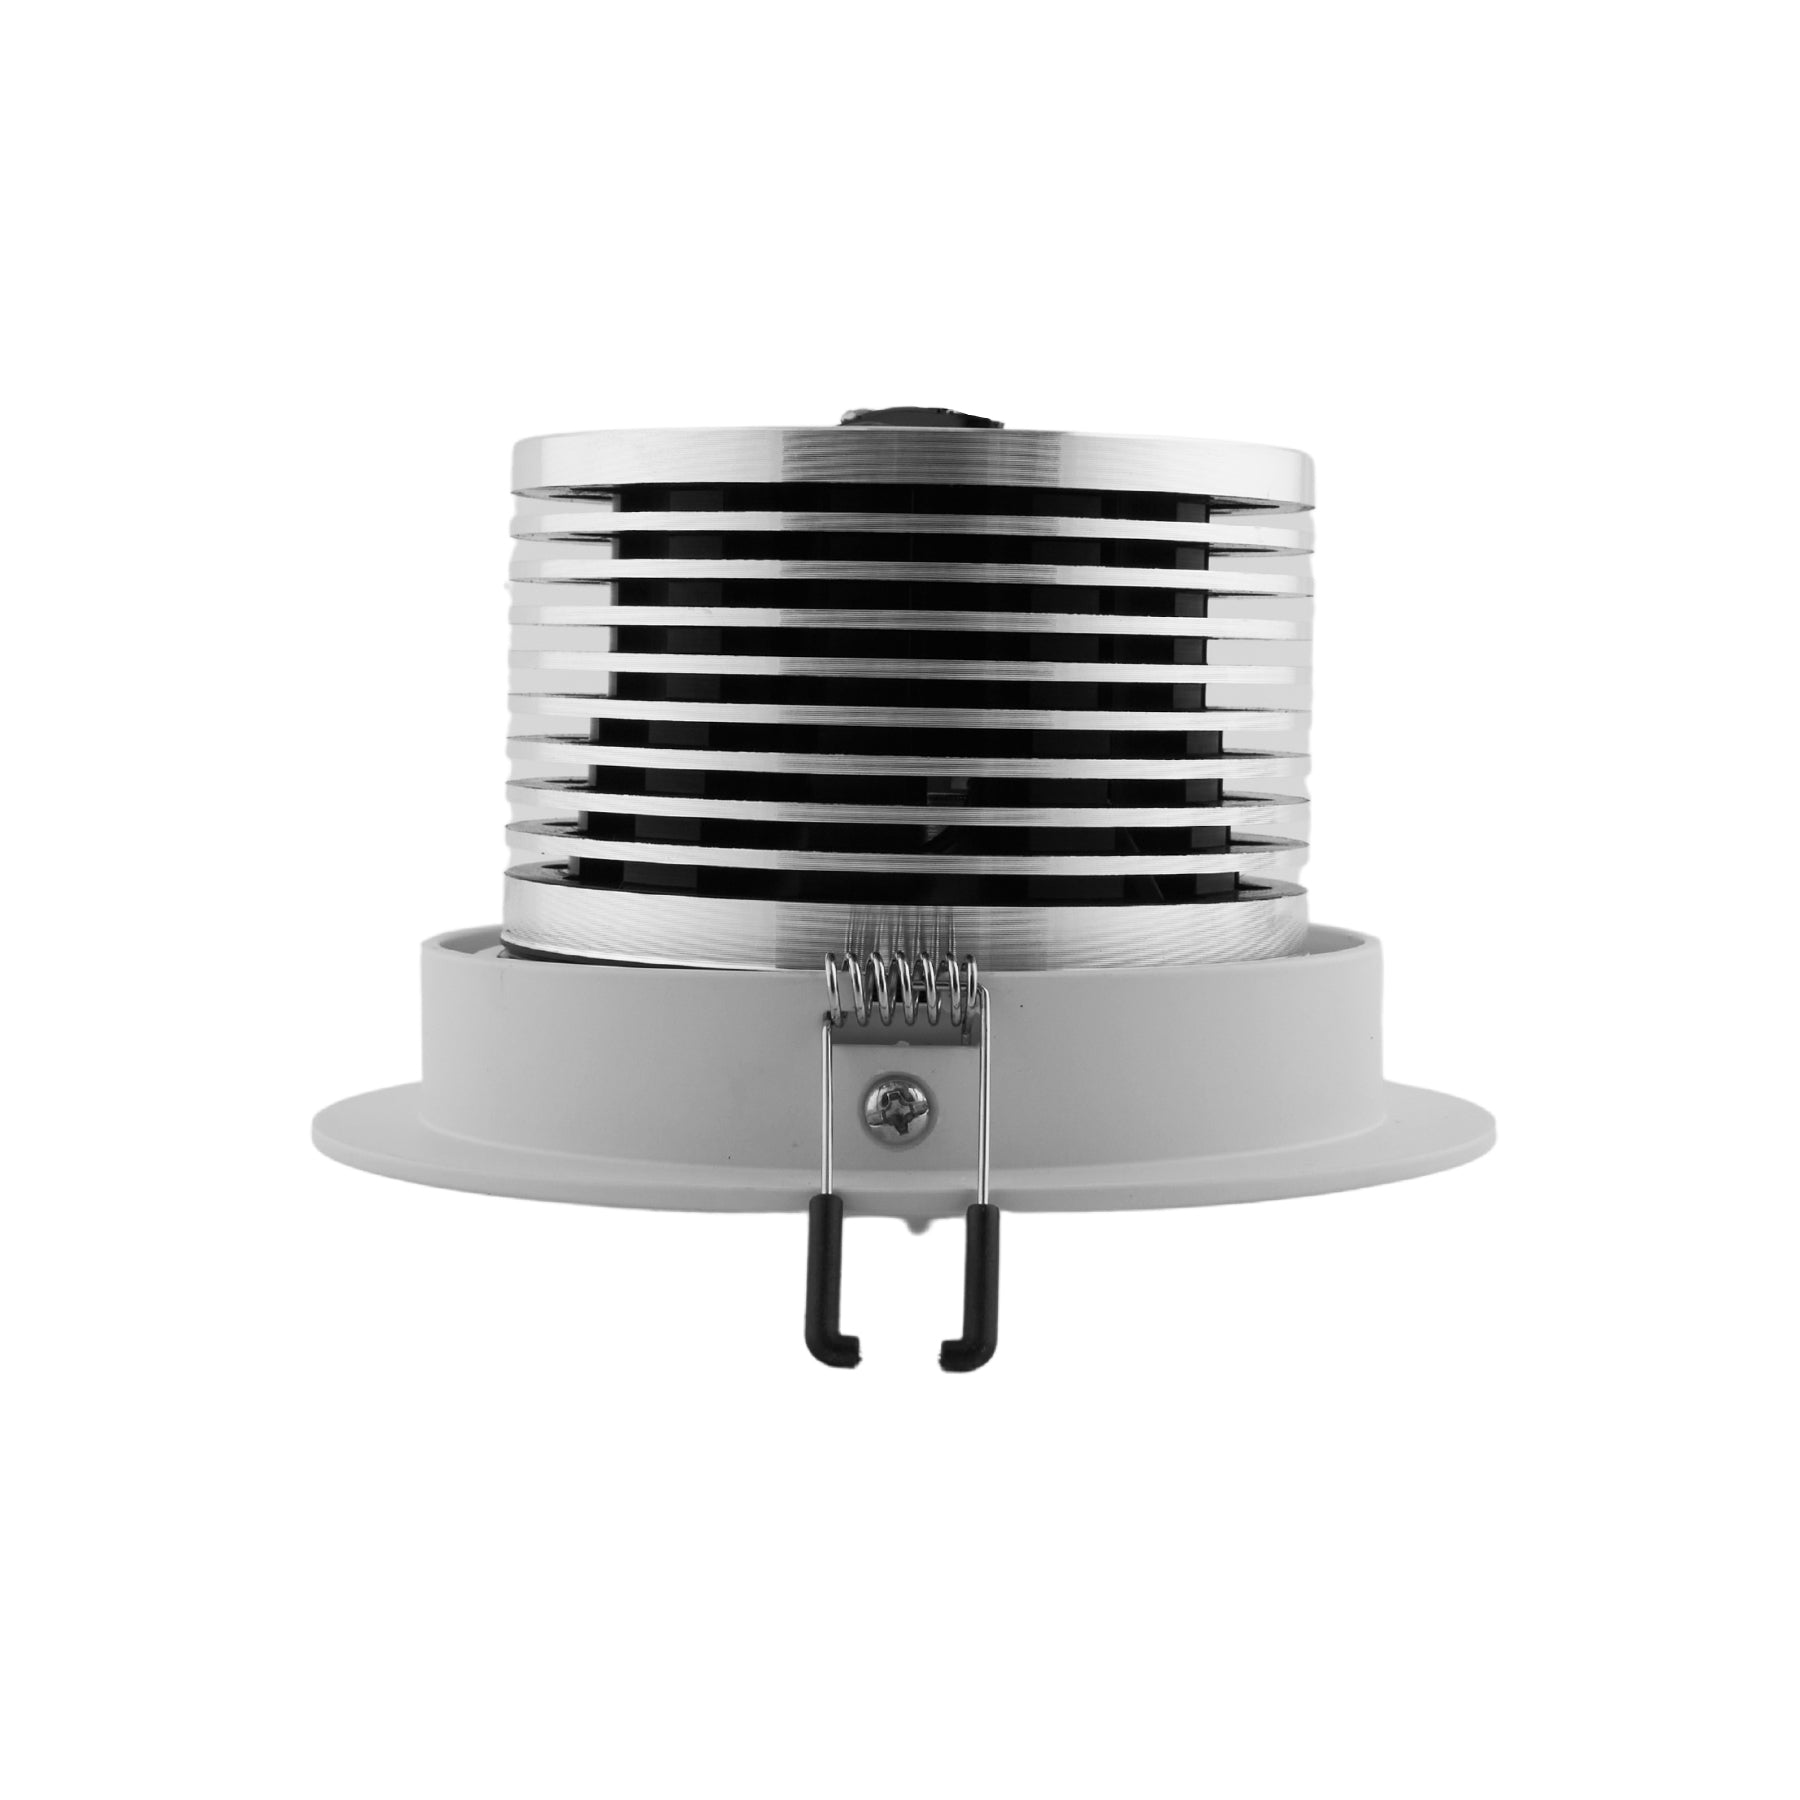 Downlight/Foco COB LED 18W Circular 6400k empotrable corte Ø 115 mm Marco Blanco